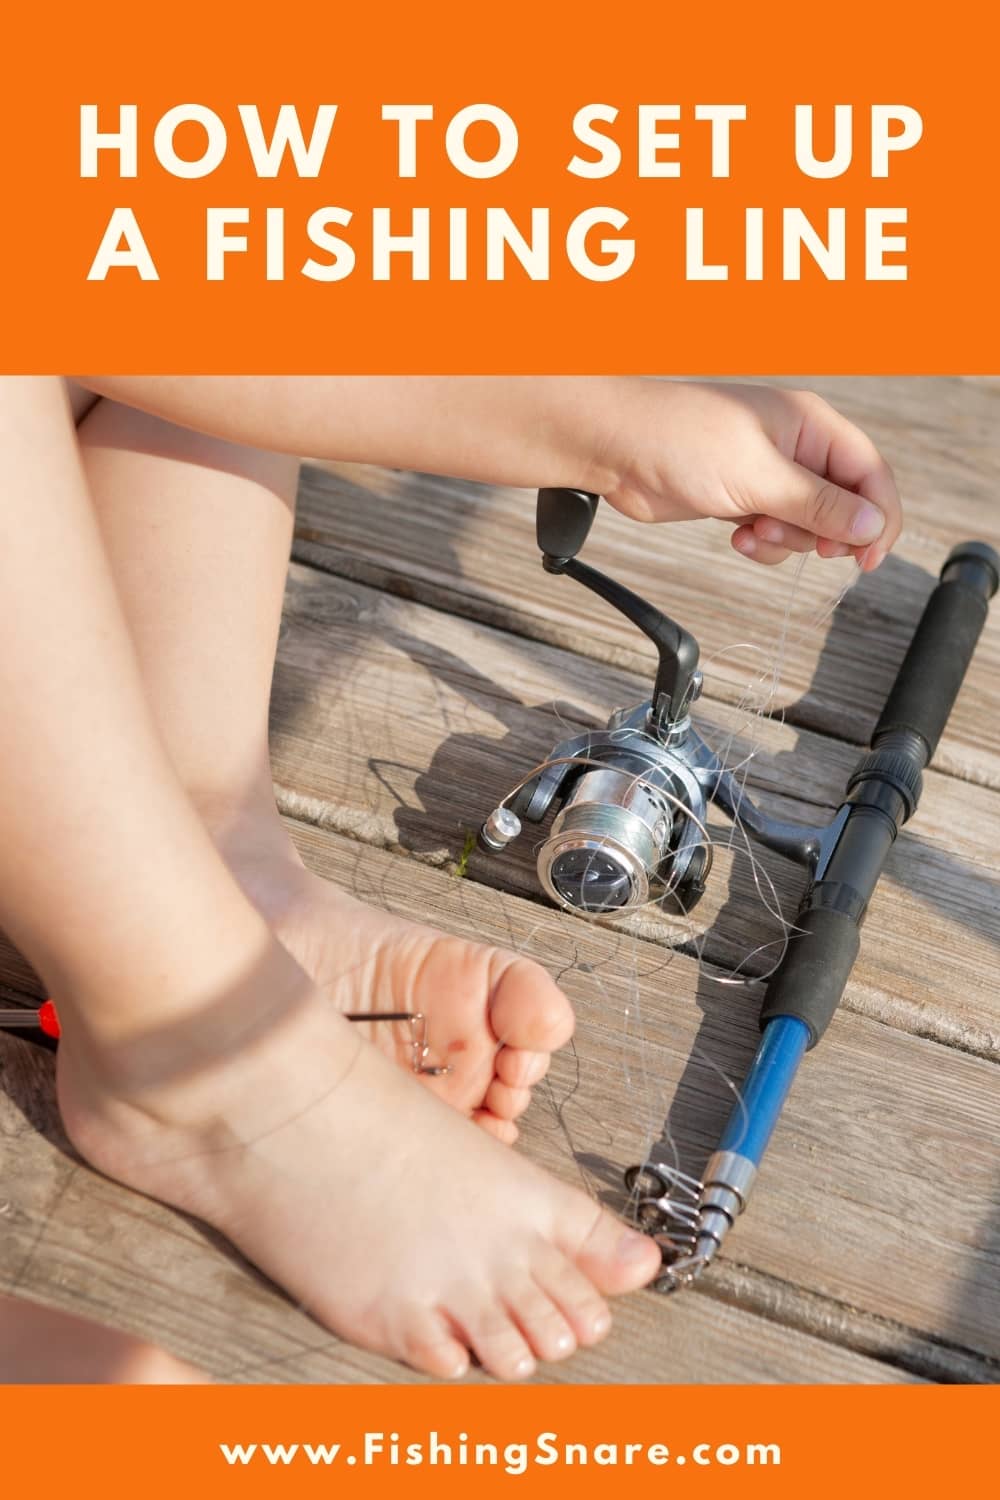 Set up a Fishing Line